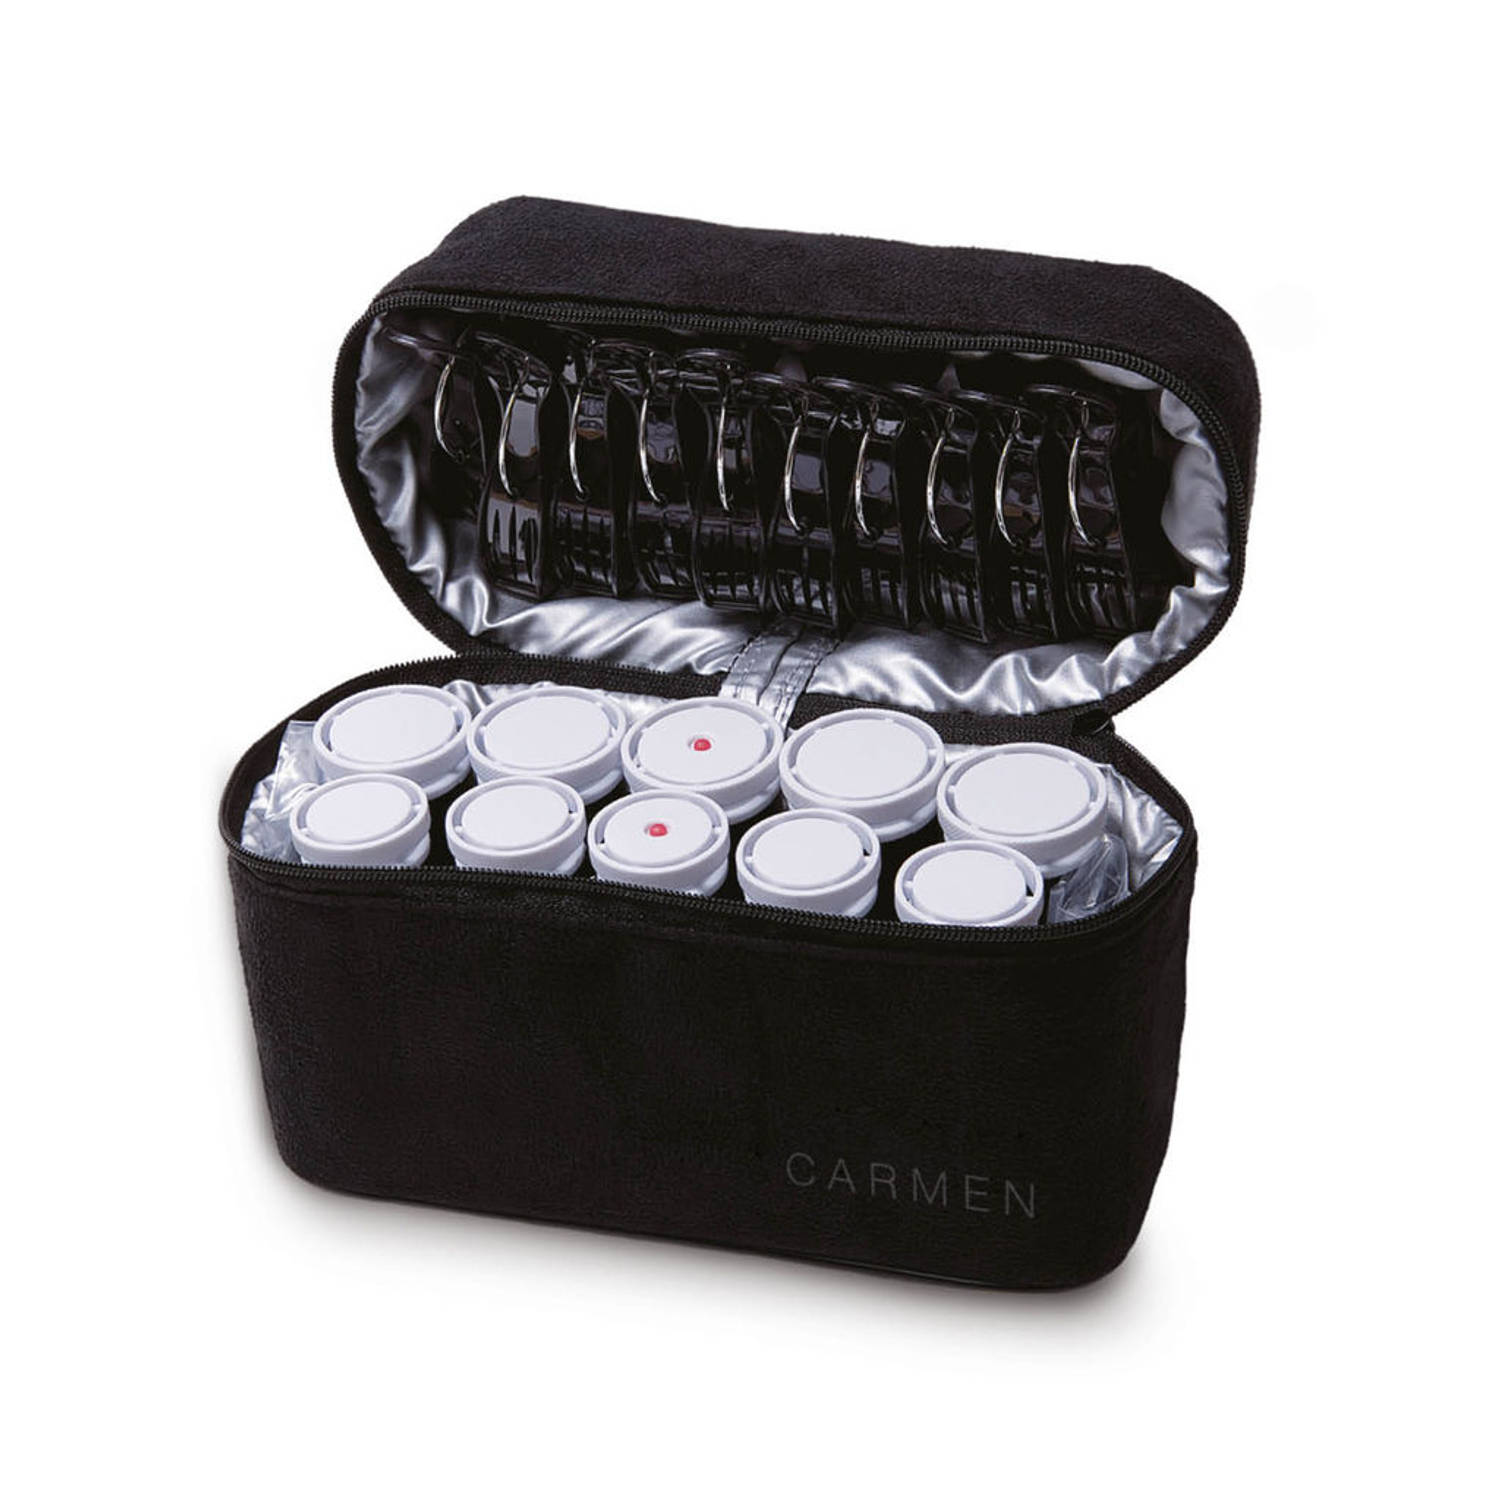 Hol dozijn Regeren Carmen C2010 - Travel Set krulset - 10 rollers - Dual voltage | Blokker